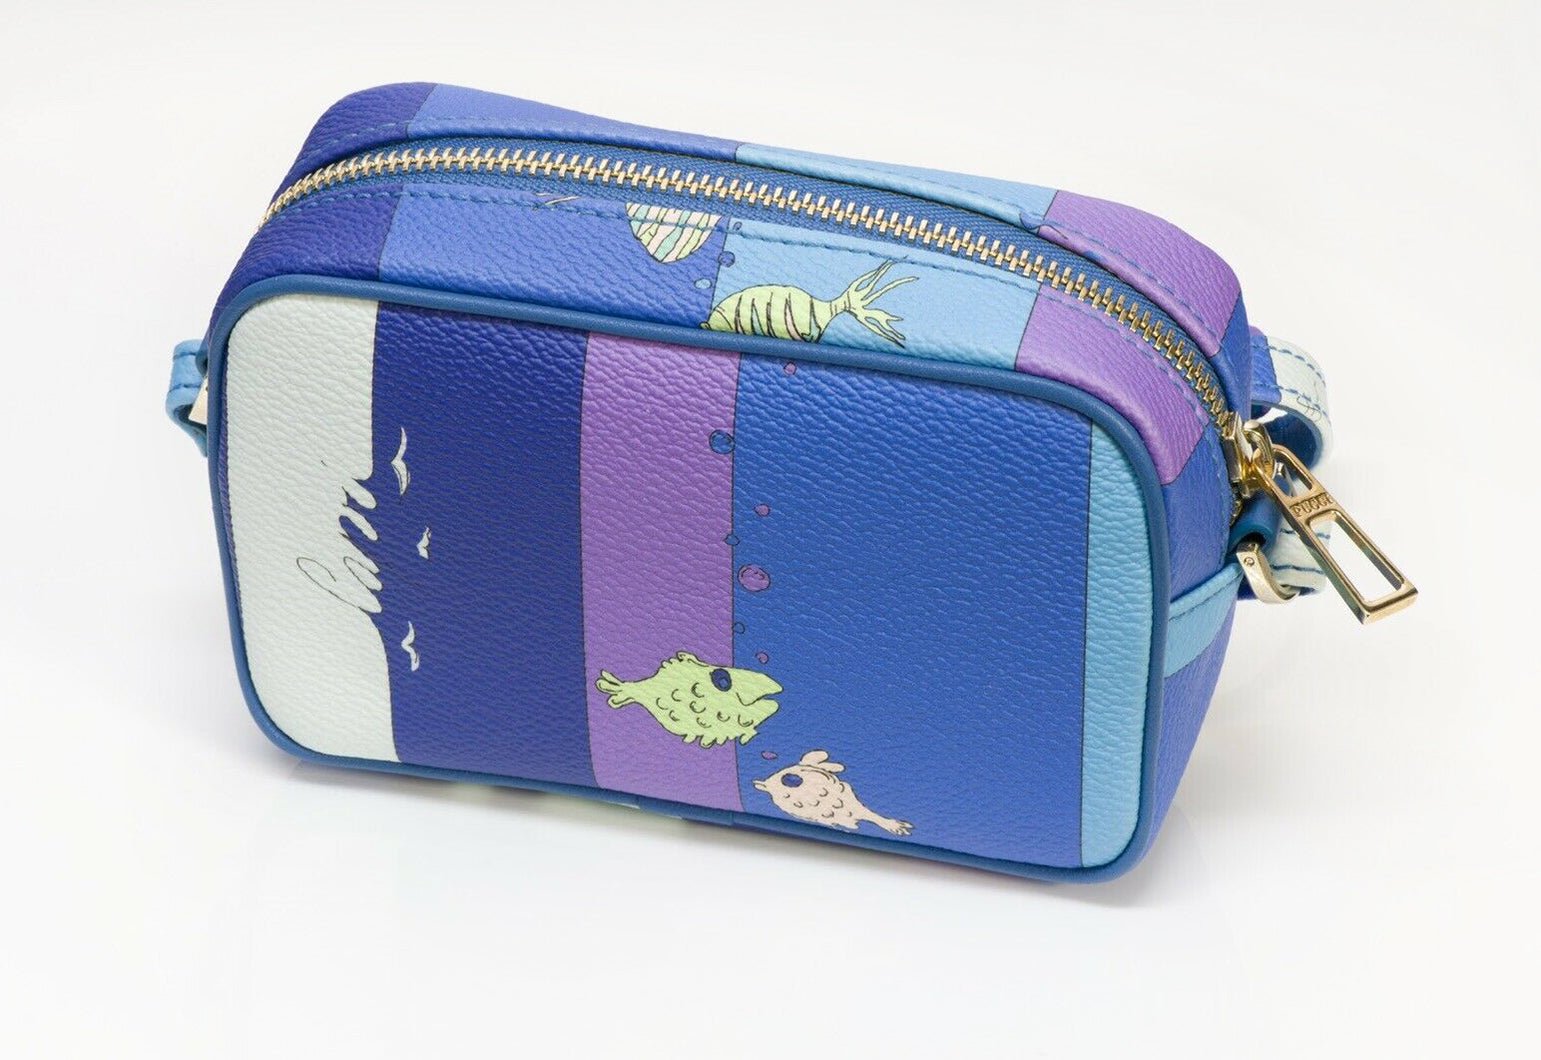 Emilio Pucci “Capri” Blue Purple Leather Fish Pattern Mini Crossbody Bag